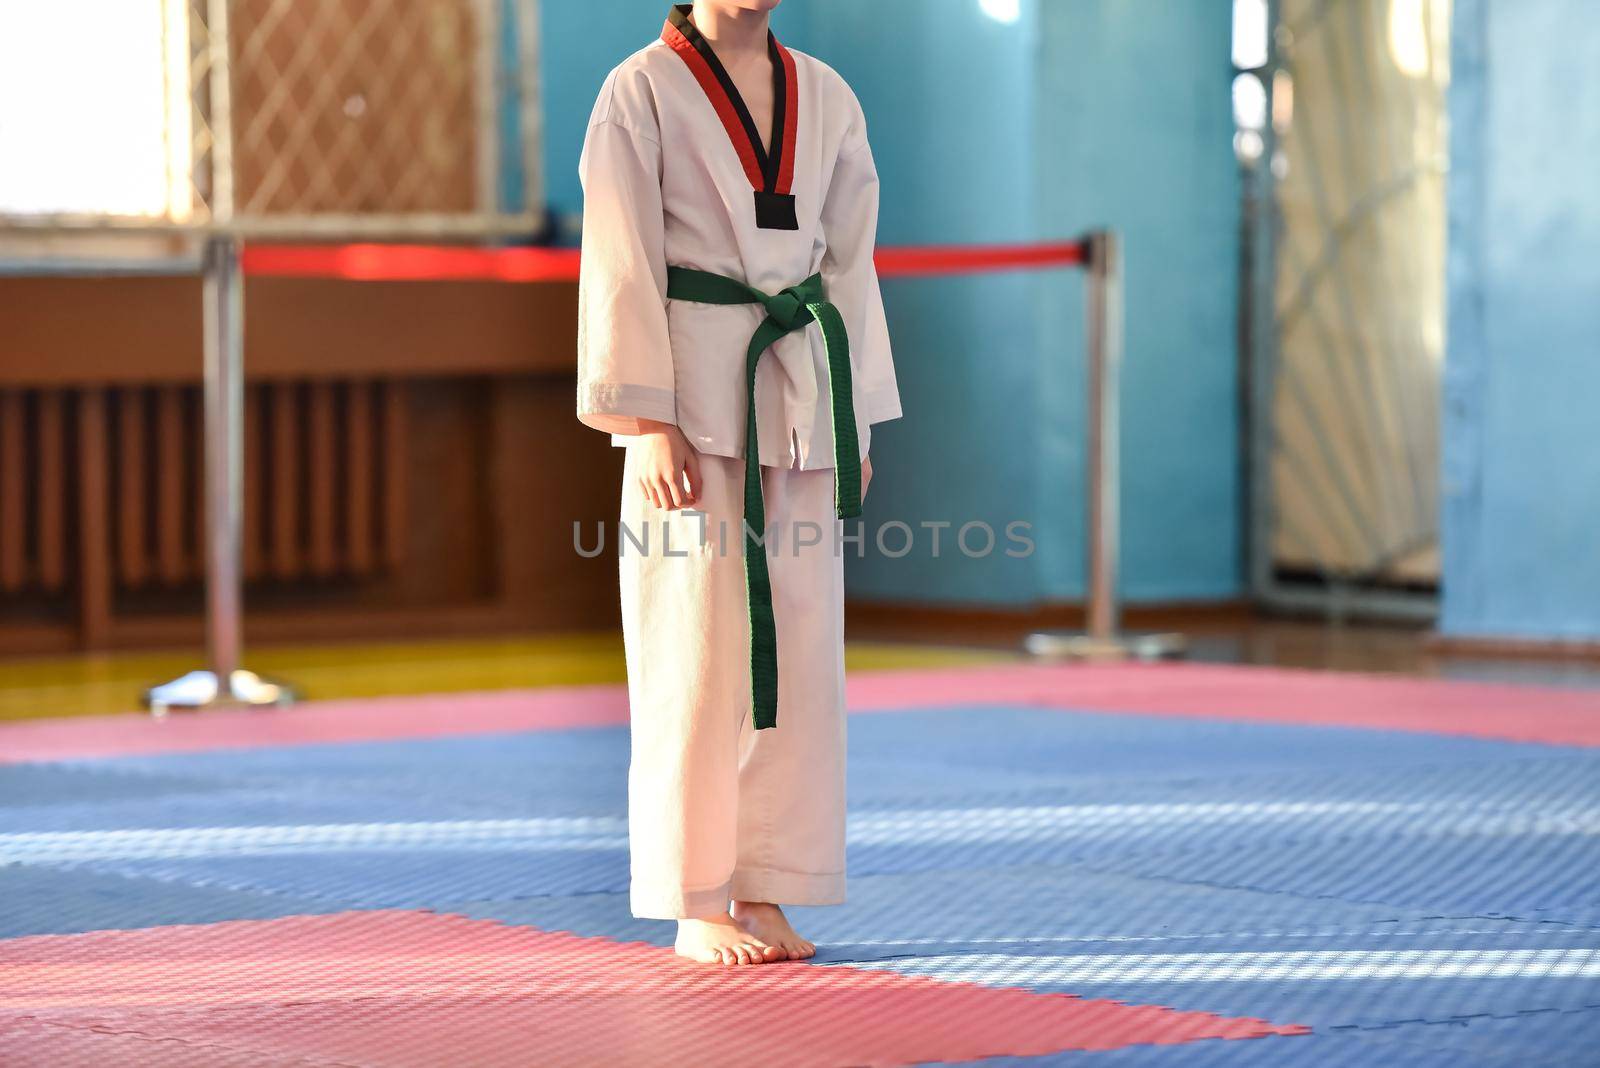 Taekwondo kids. A boy athlete stands in a taekwondo uniform with a green belt during a taekwondo tournament.